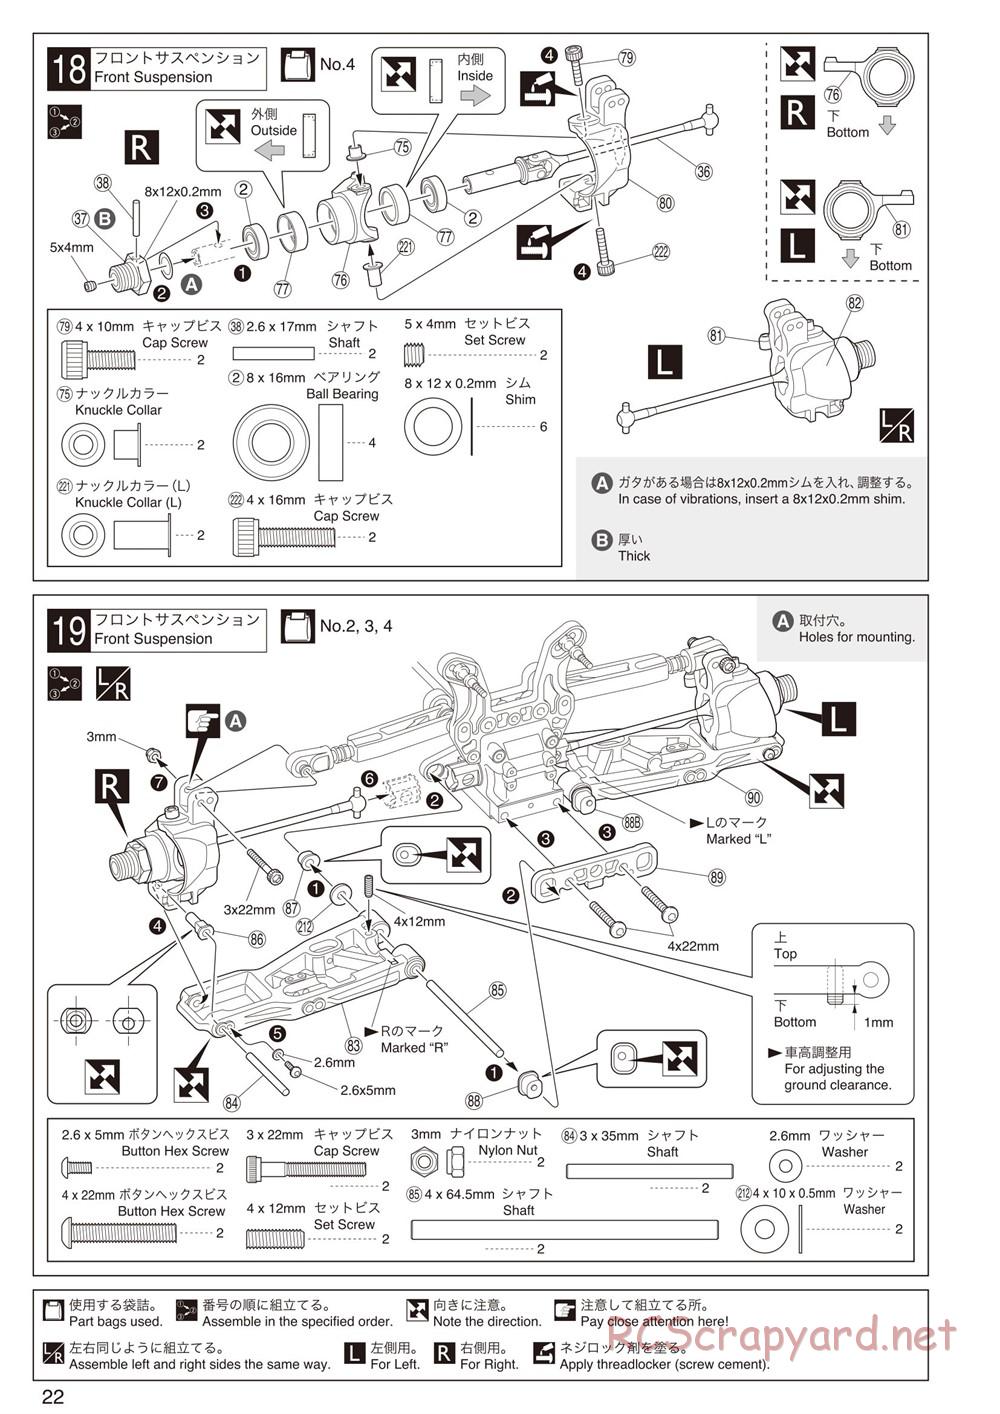 Kyosho - Inferno MP9 TKI2 - Manual - Page 22